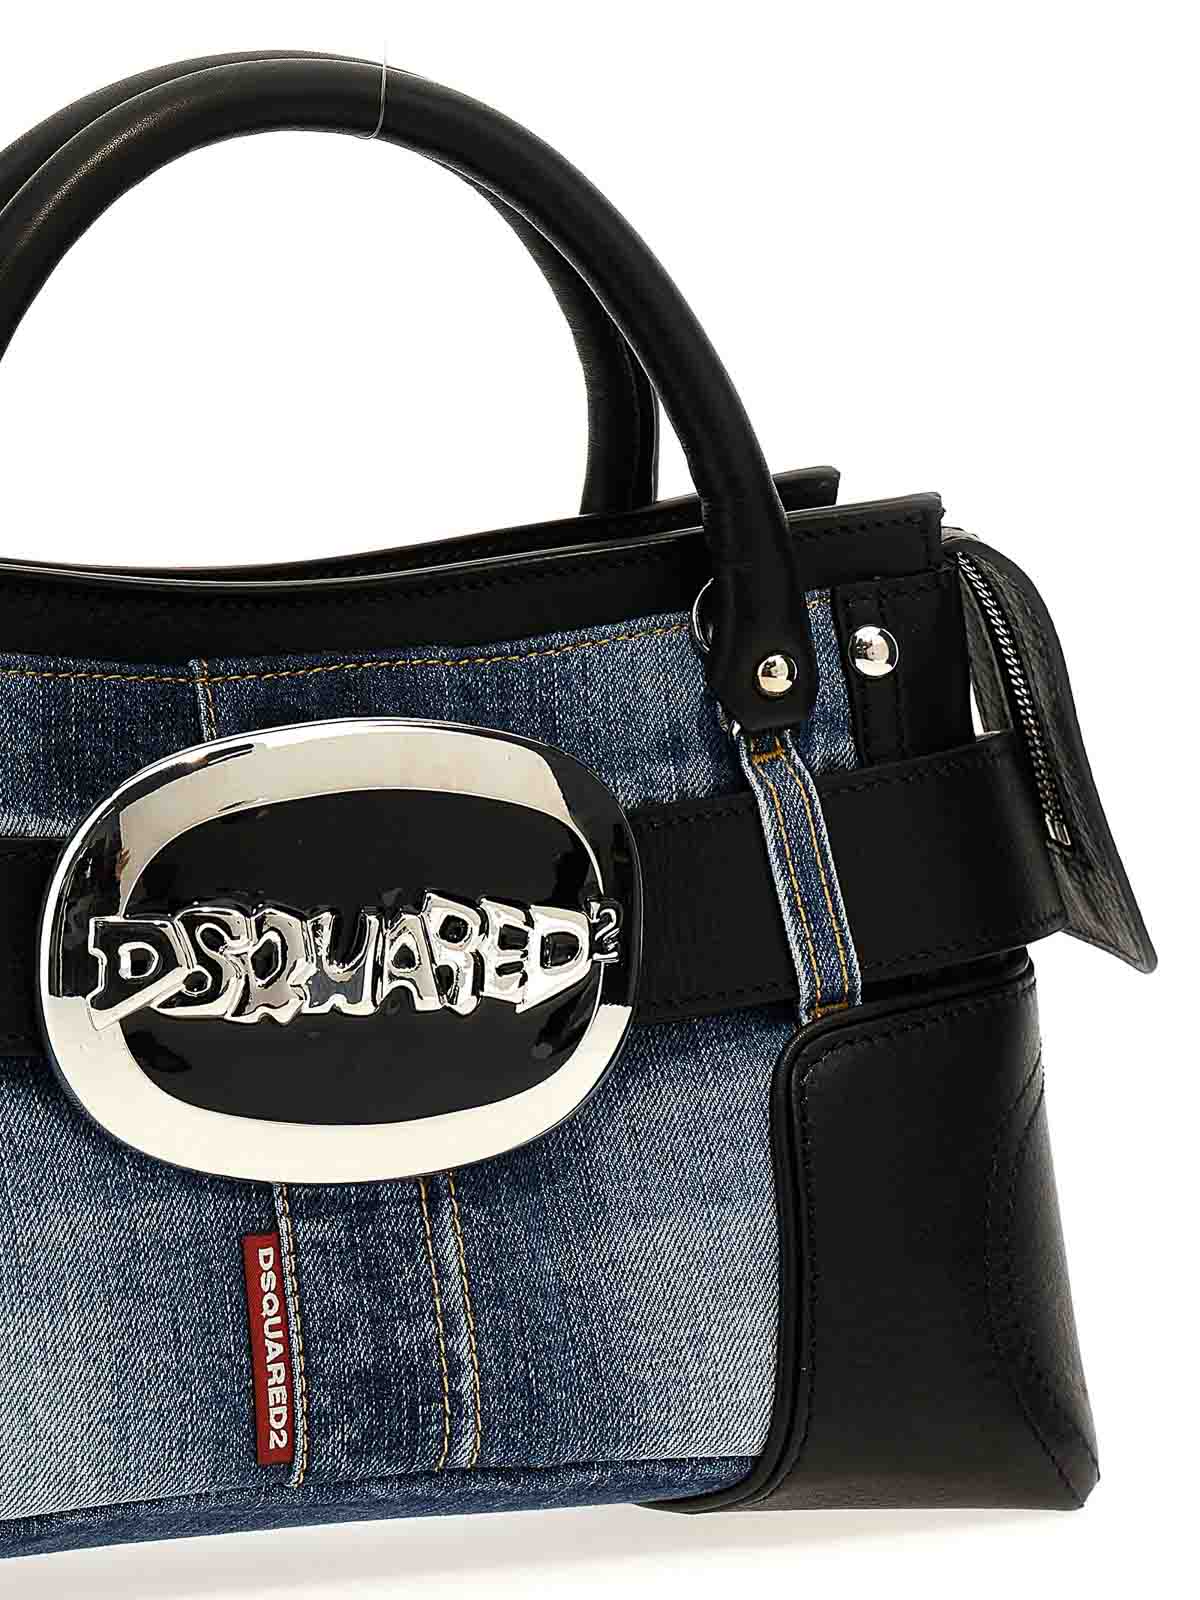 Totes bags Dsquared2 - vintage closet handbag - HBW005910106983M2498